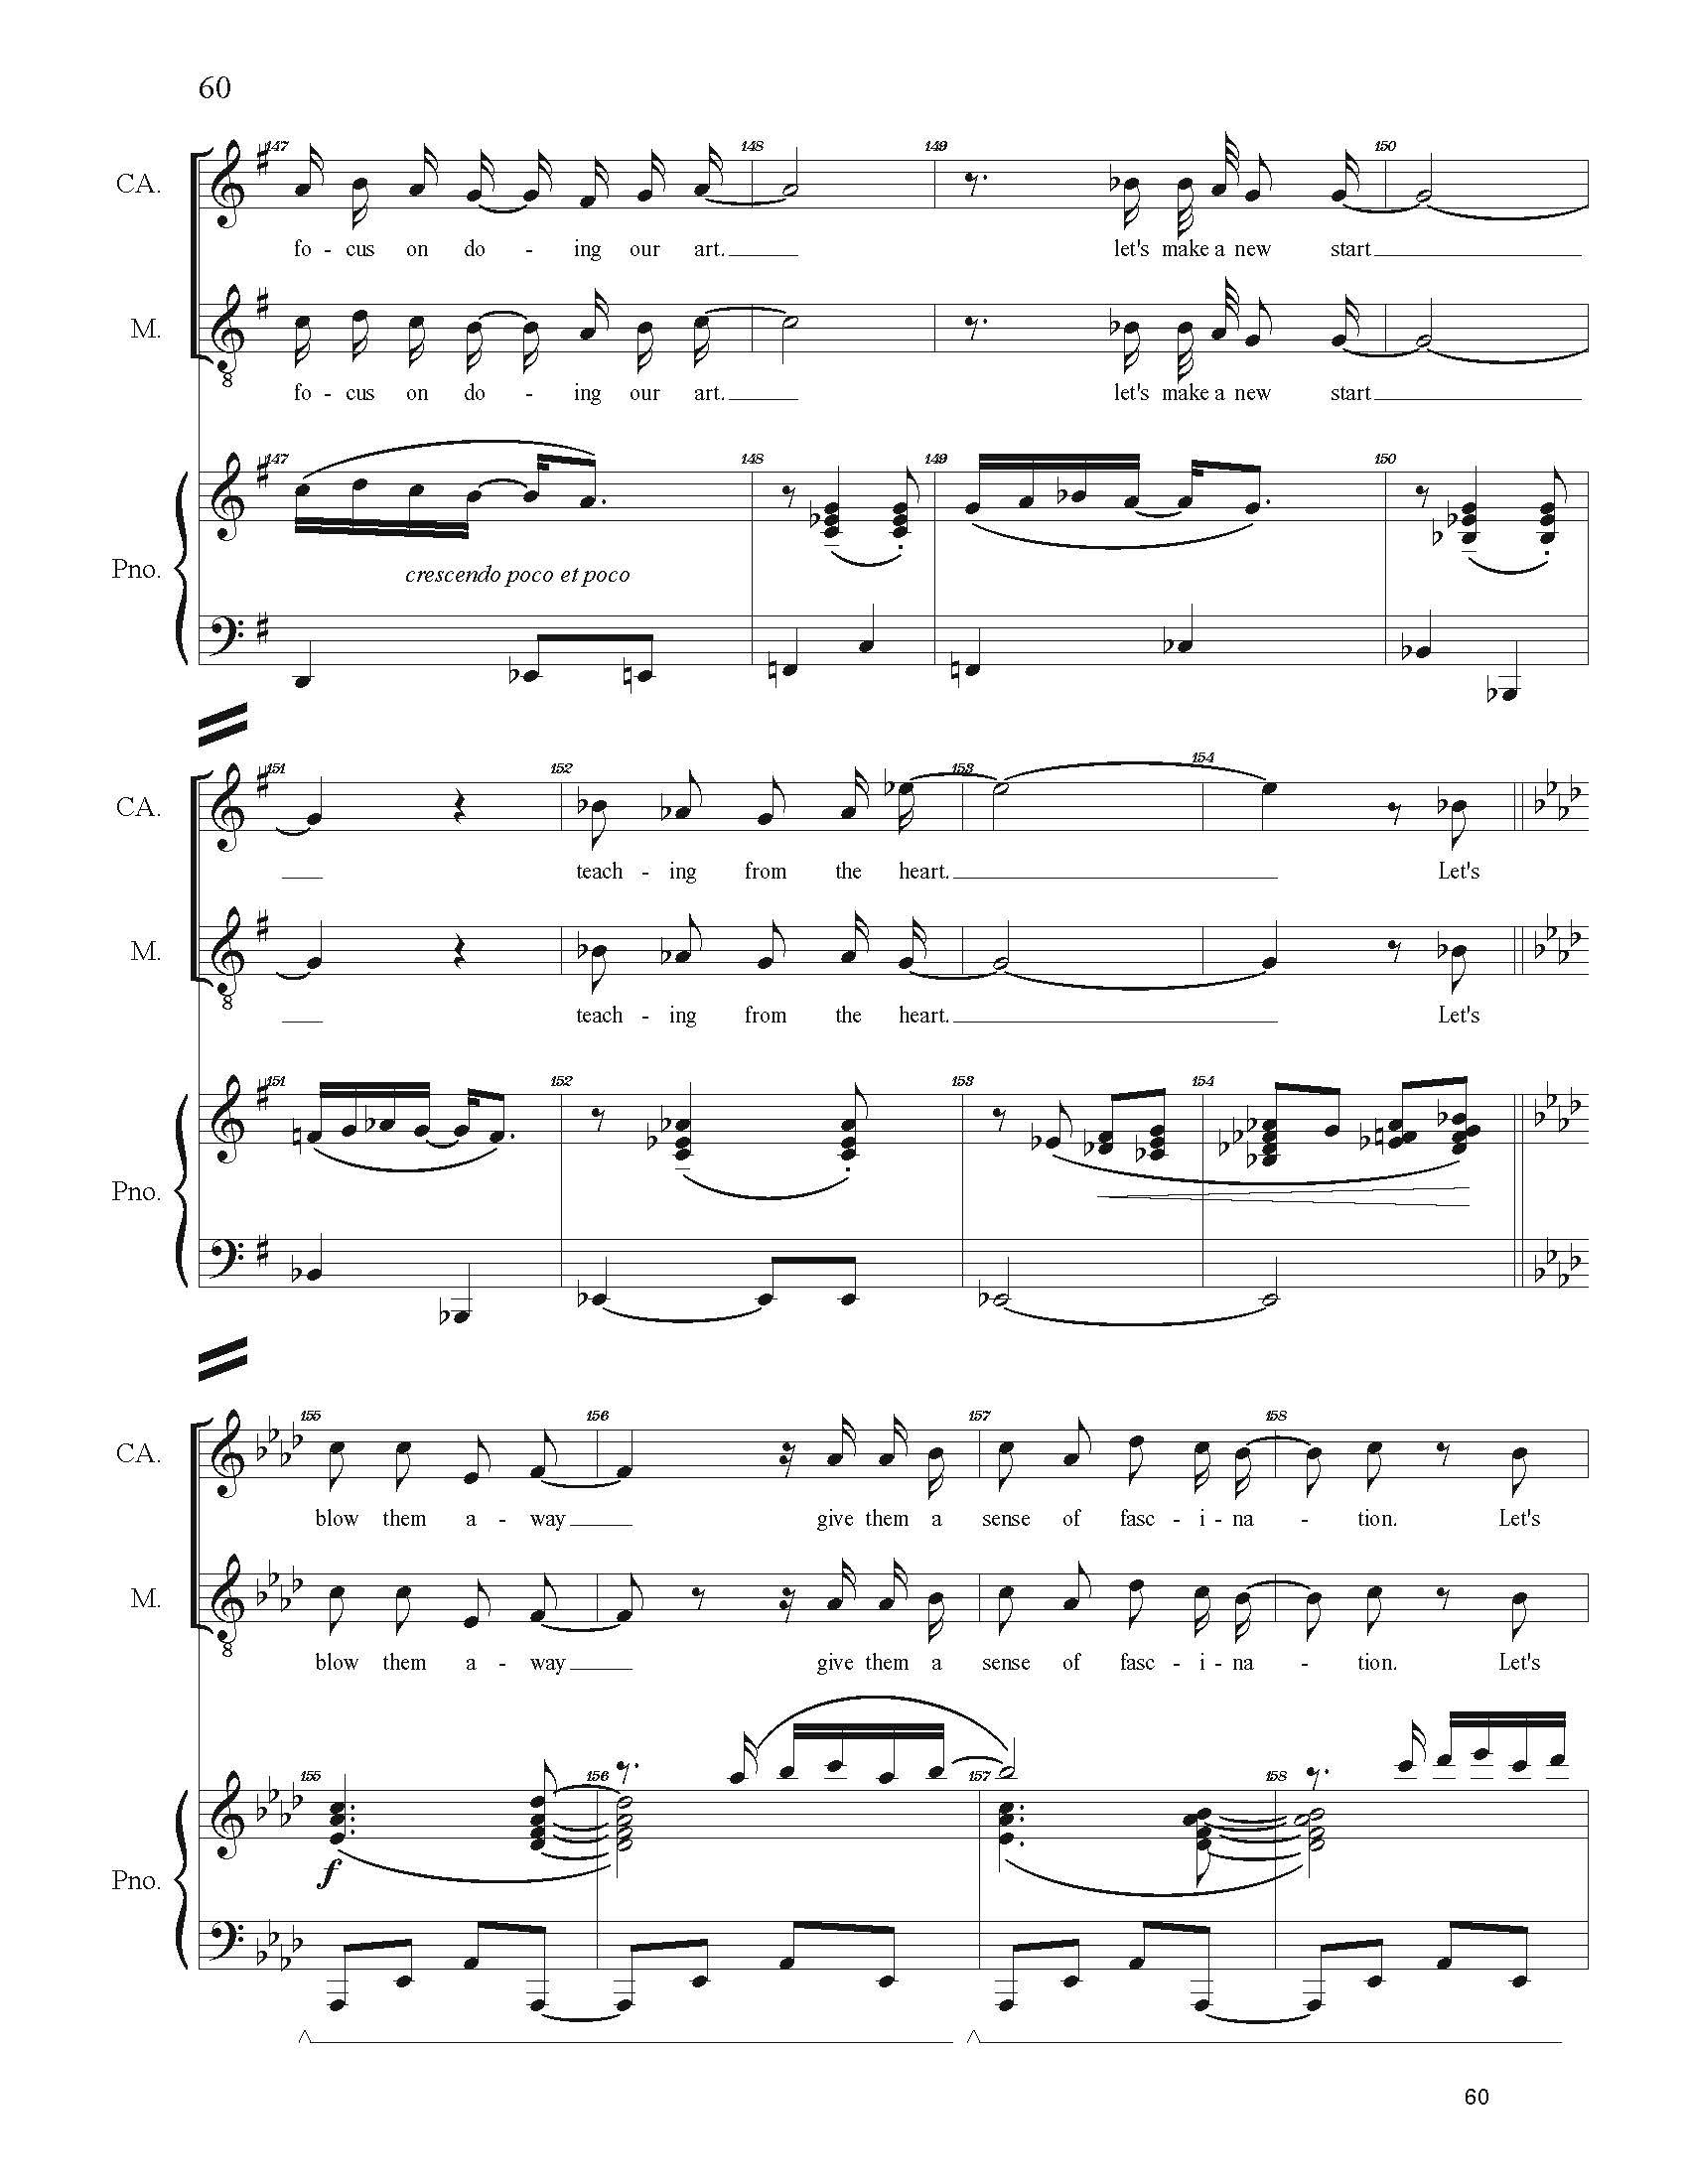 FULL PIANO VOCAL SCORE DRAFT 1 - Score_Page_060.jpg